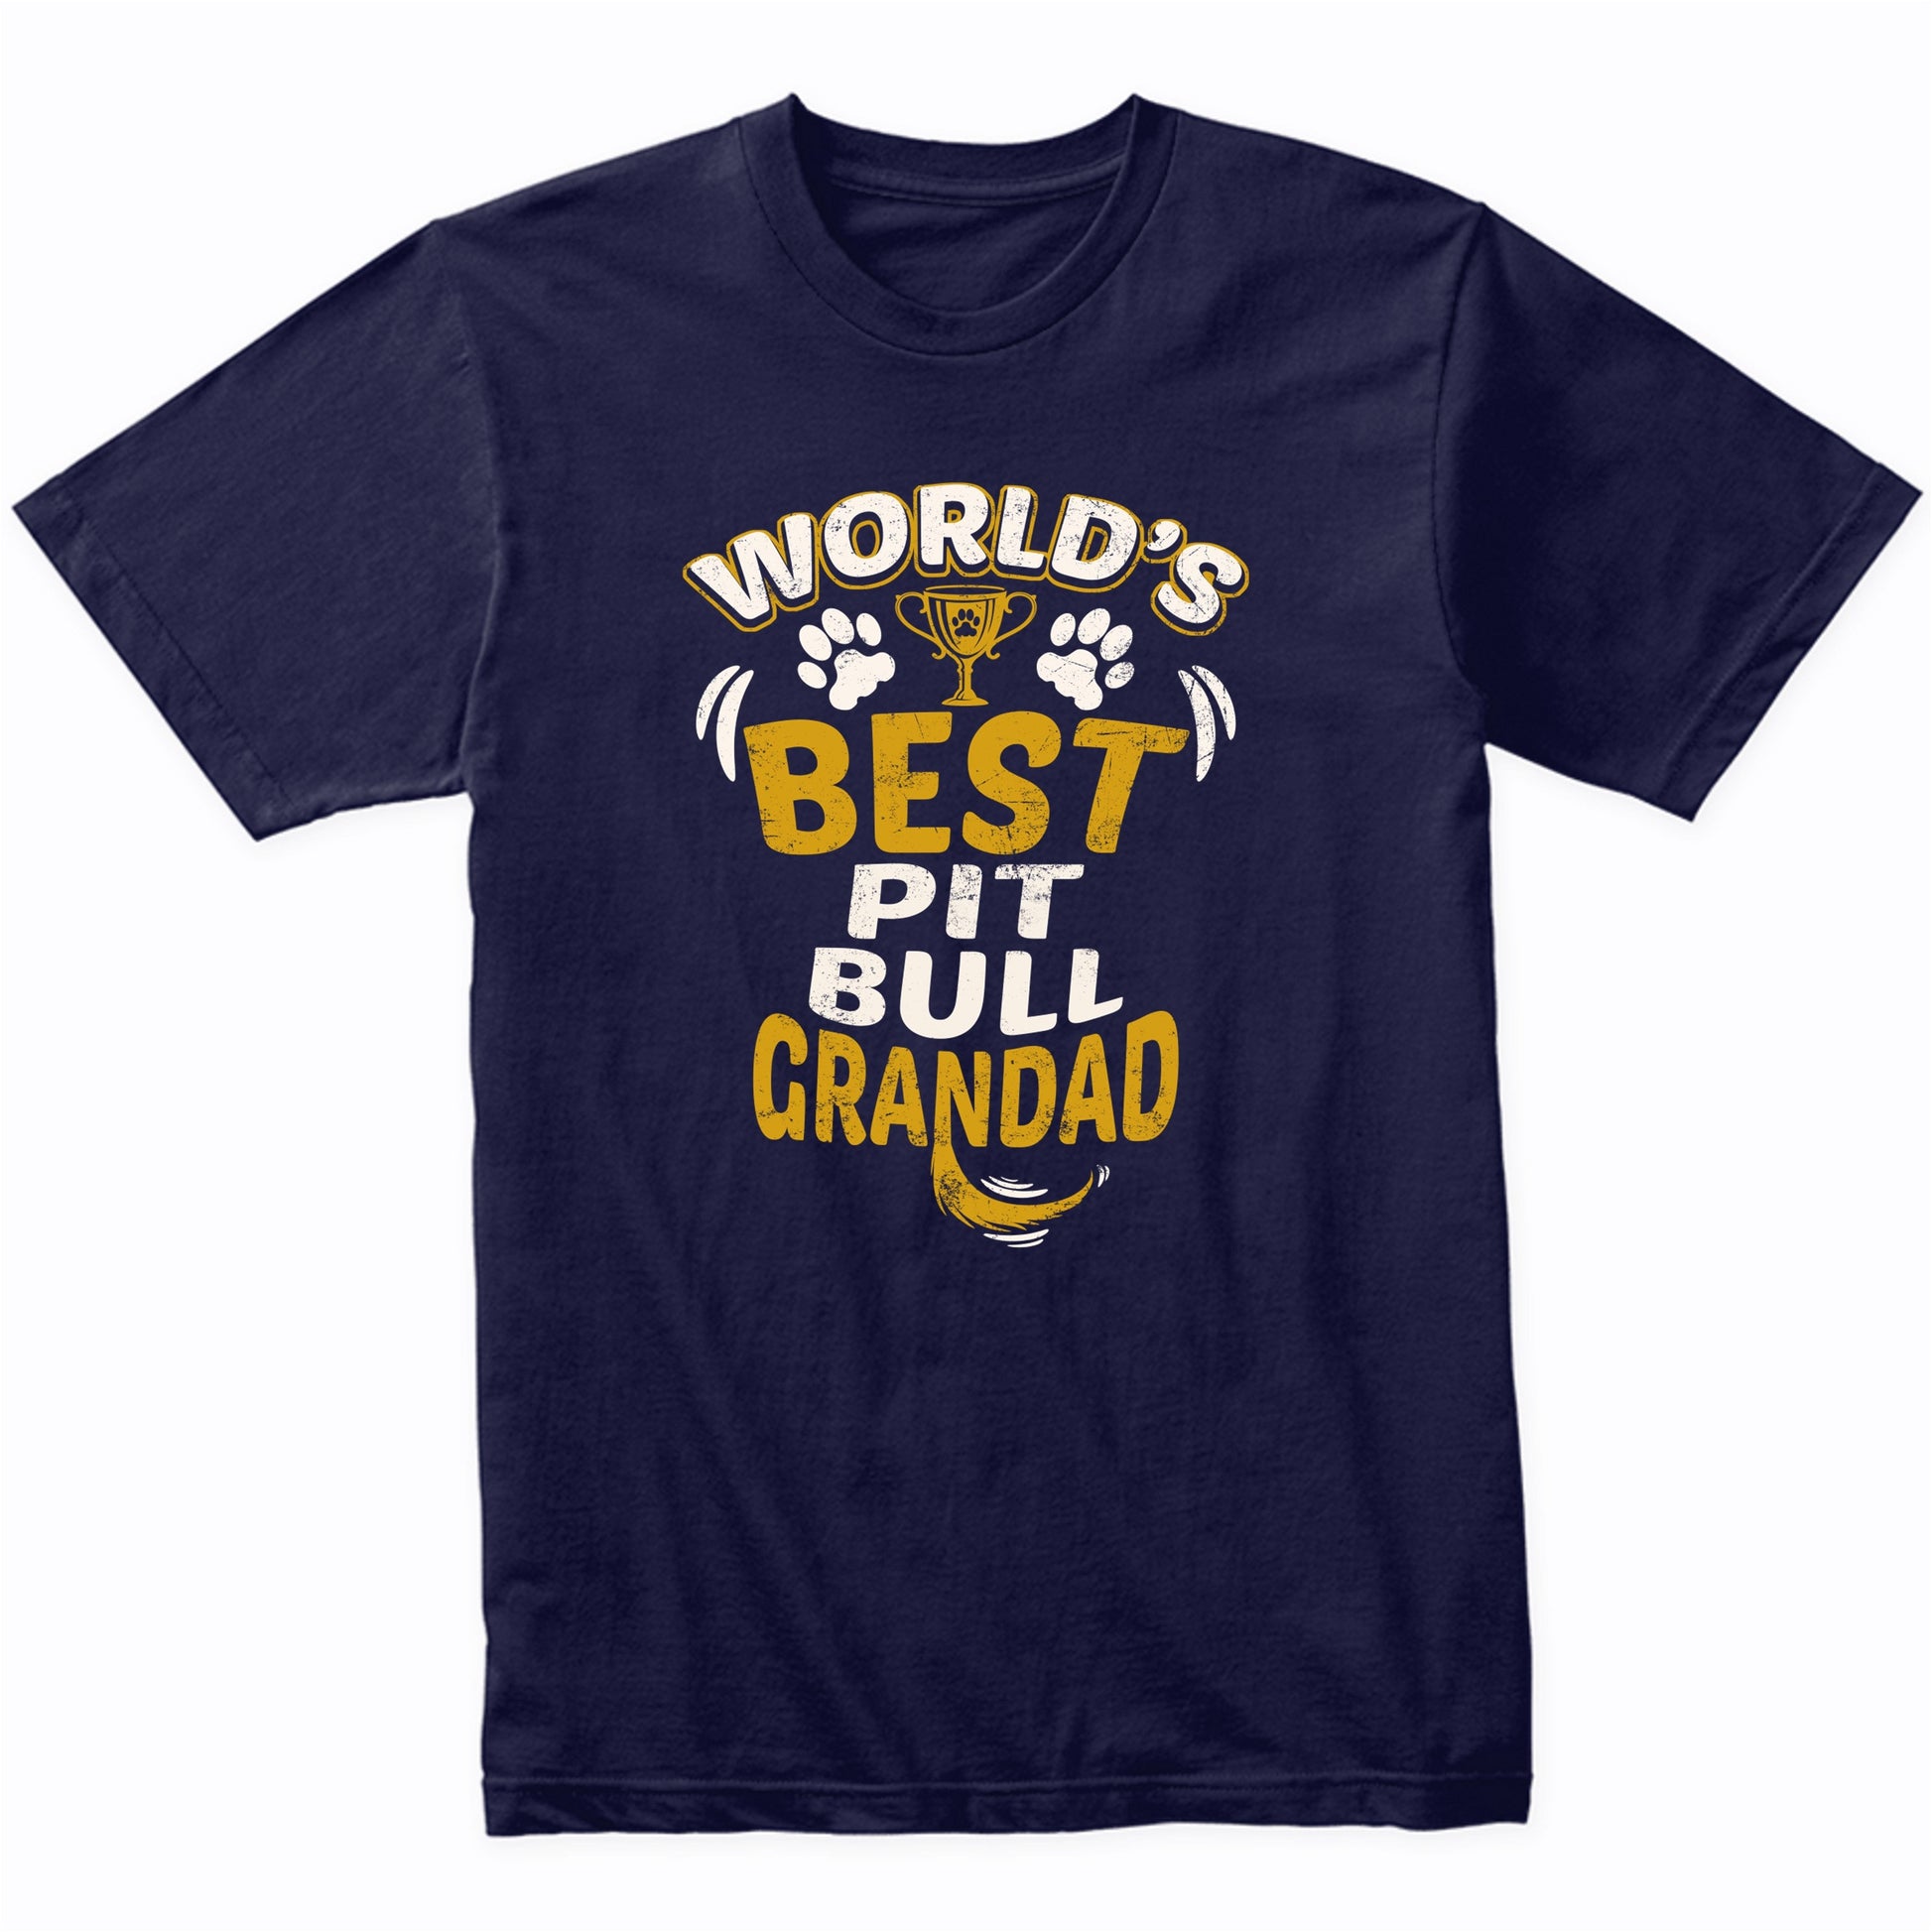 World's Best Pit Bull Grandad Graphic T-Shirt